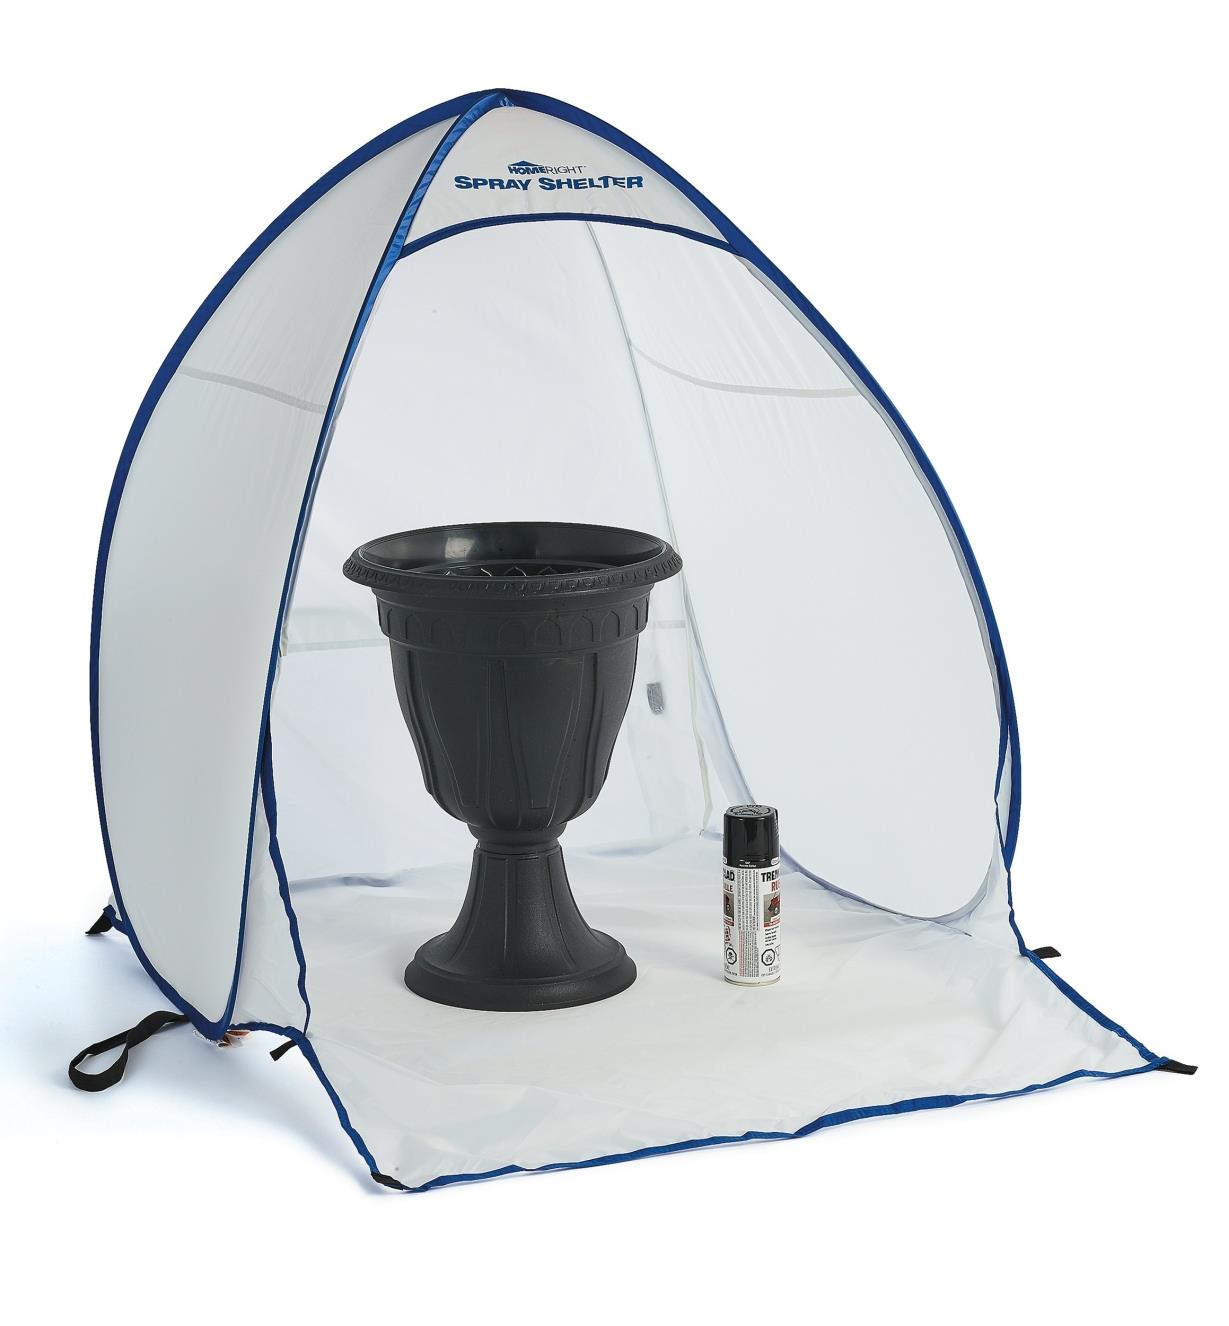 03K0310 - Small Portable Spray Shelter (35" × 30" × 39")